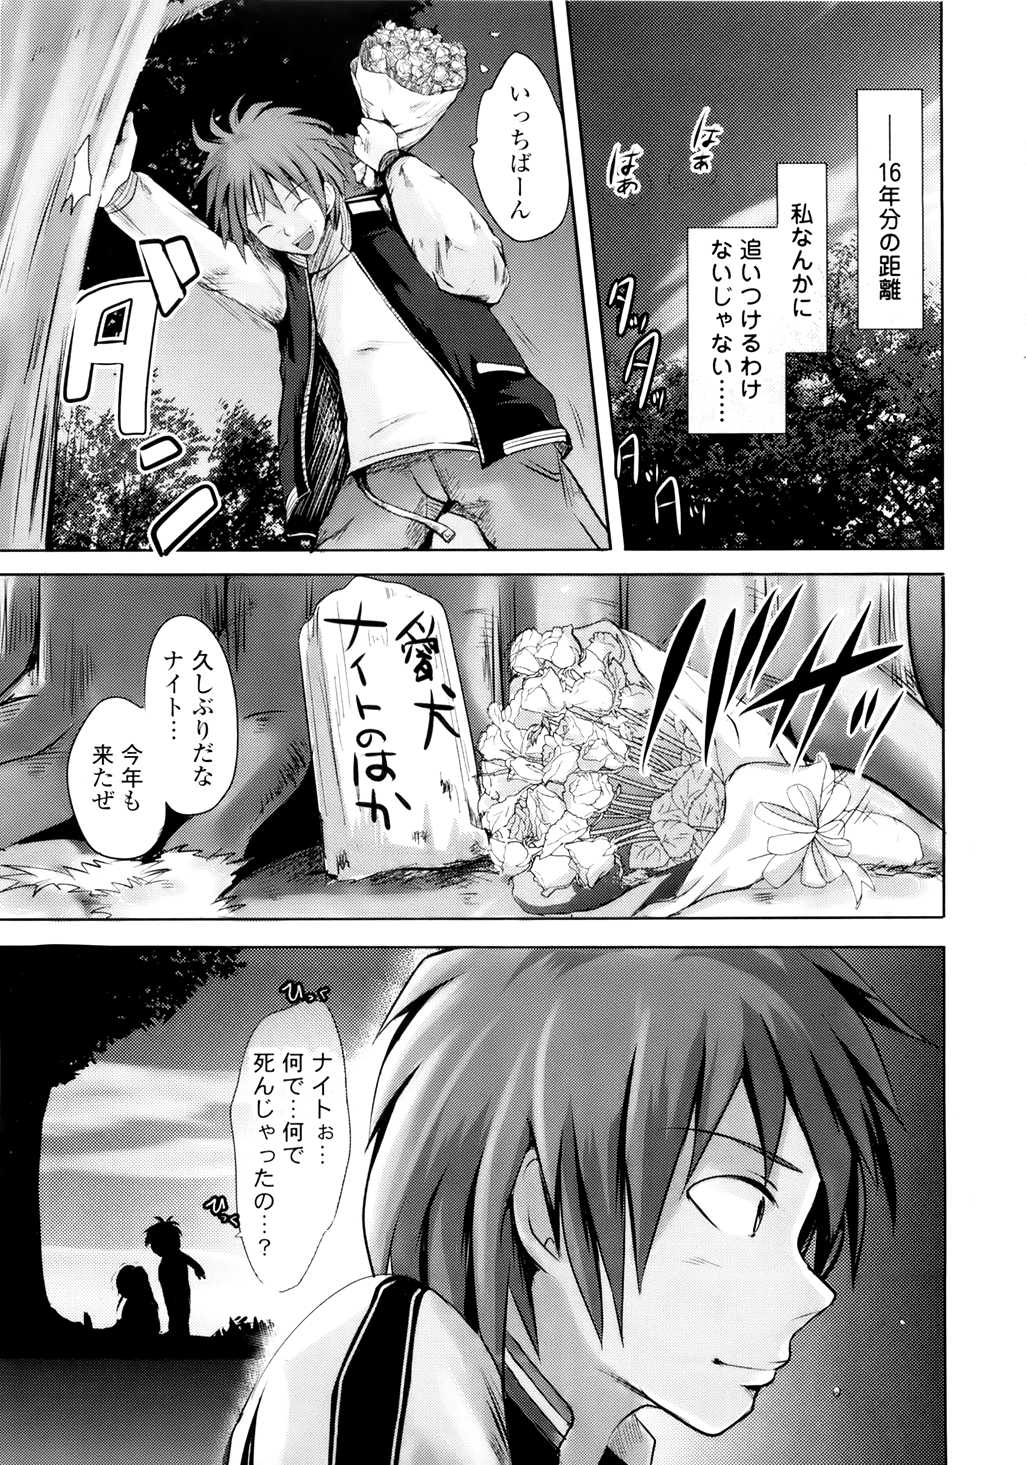 [Natsume Fumika] Sundere! Vol. 01 [夏目文花] スンデレ!Vol.01